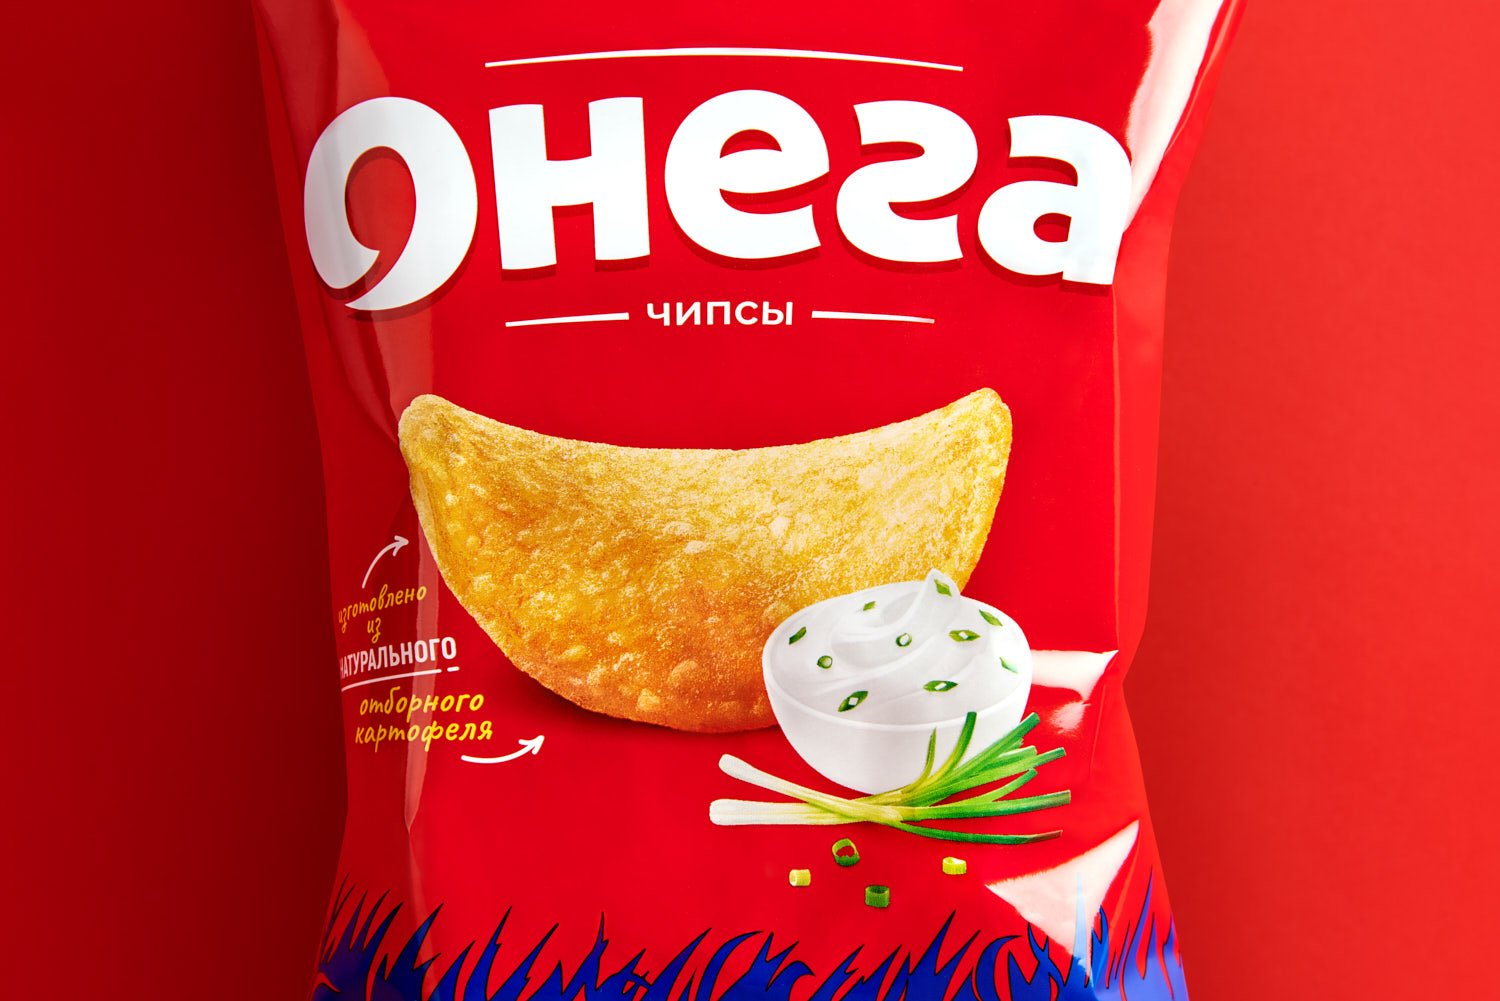 Онега билеты. Онега чипсы. Онега логотип. Онега упаковка. Белорусские чипсы Онега.